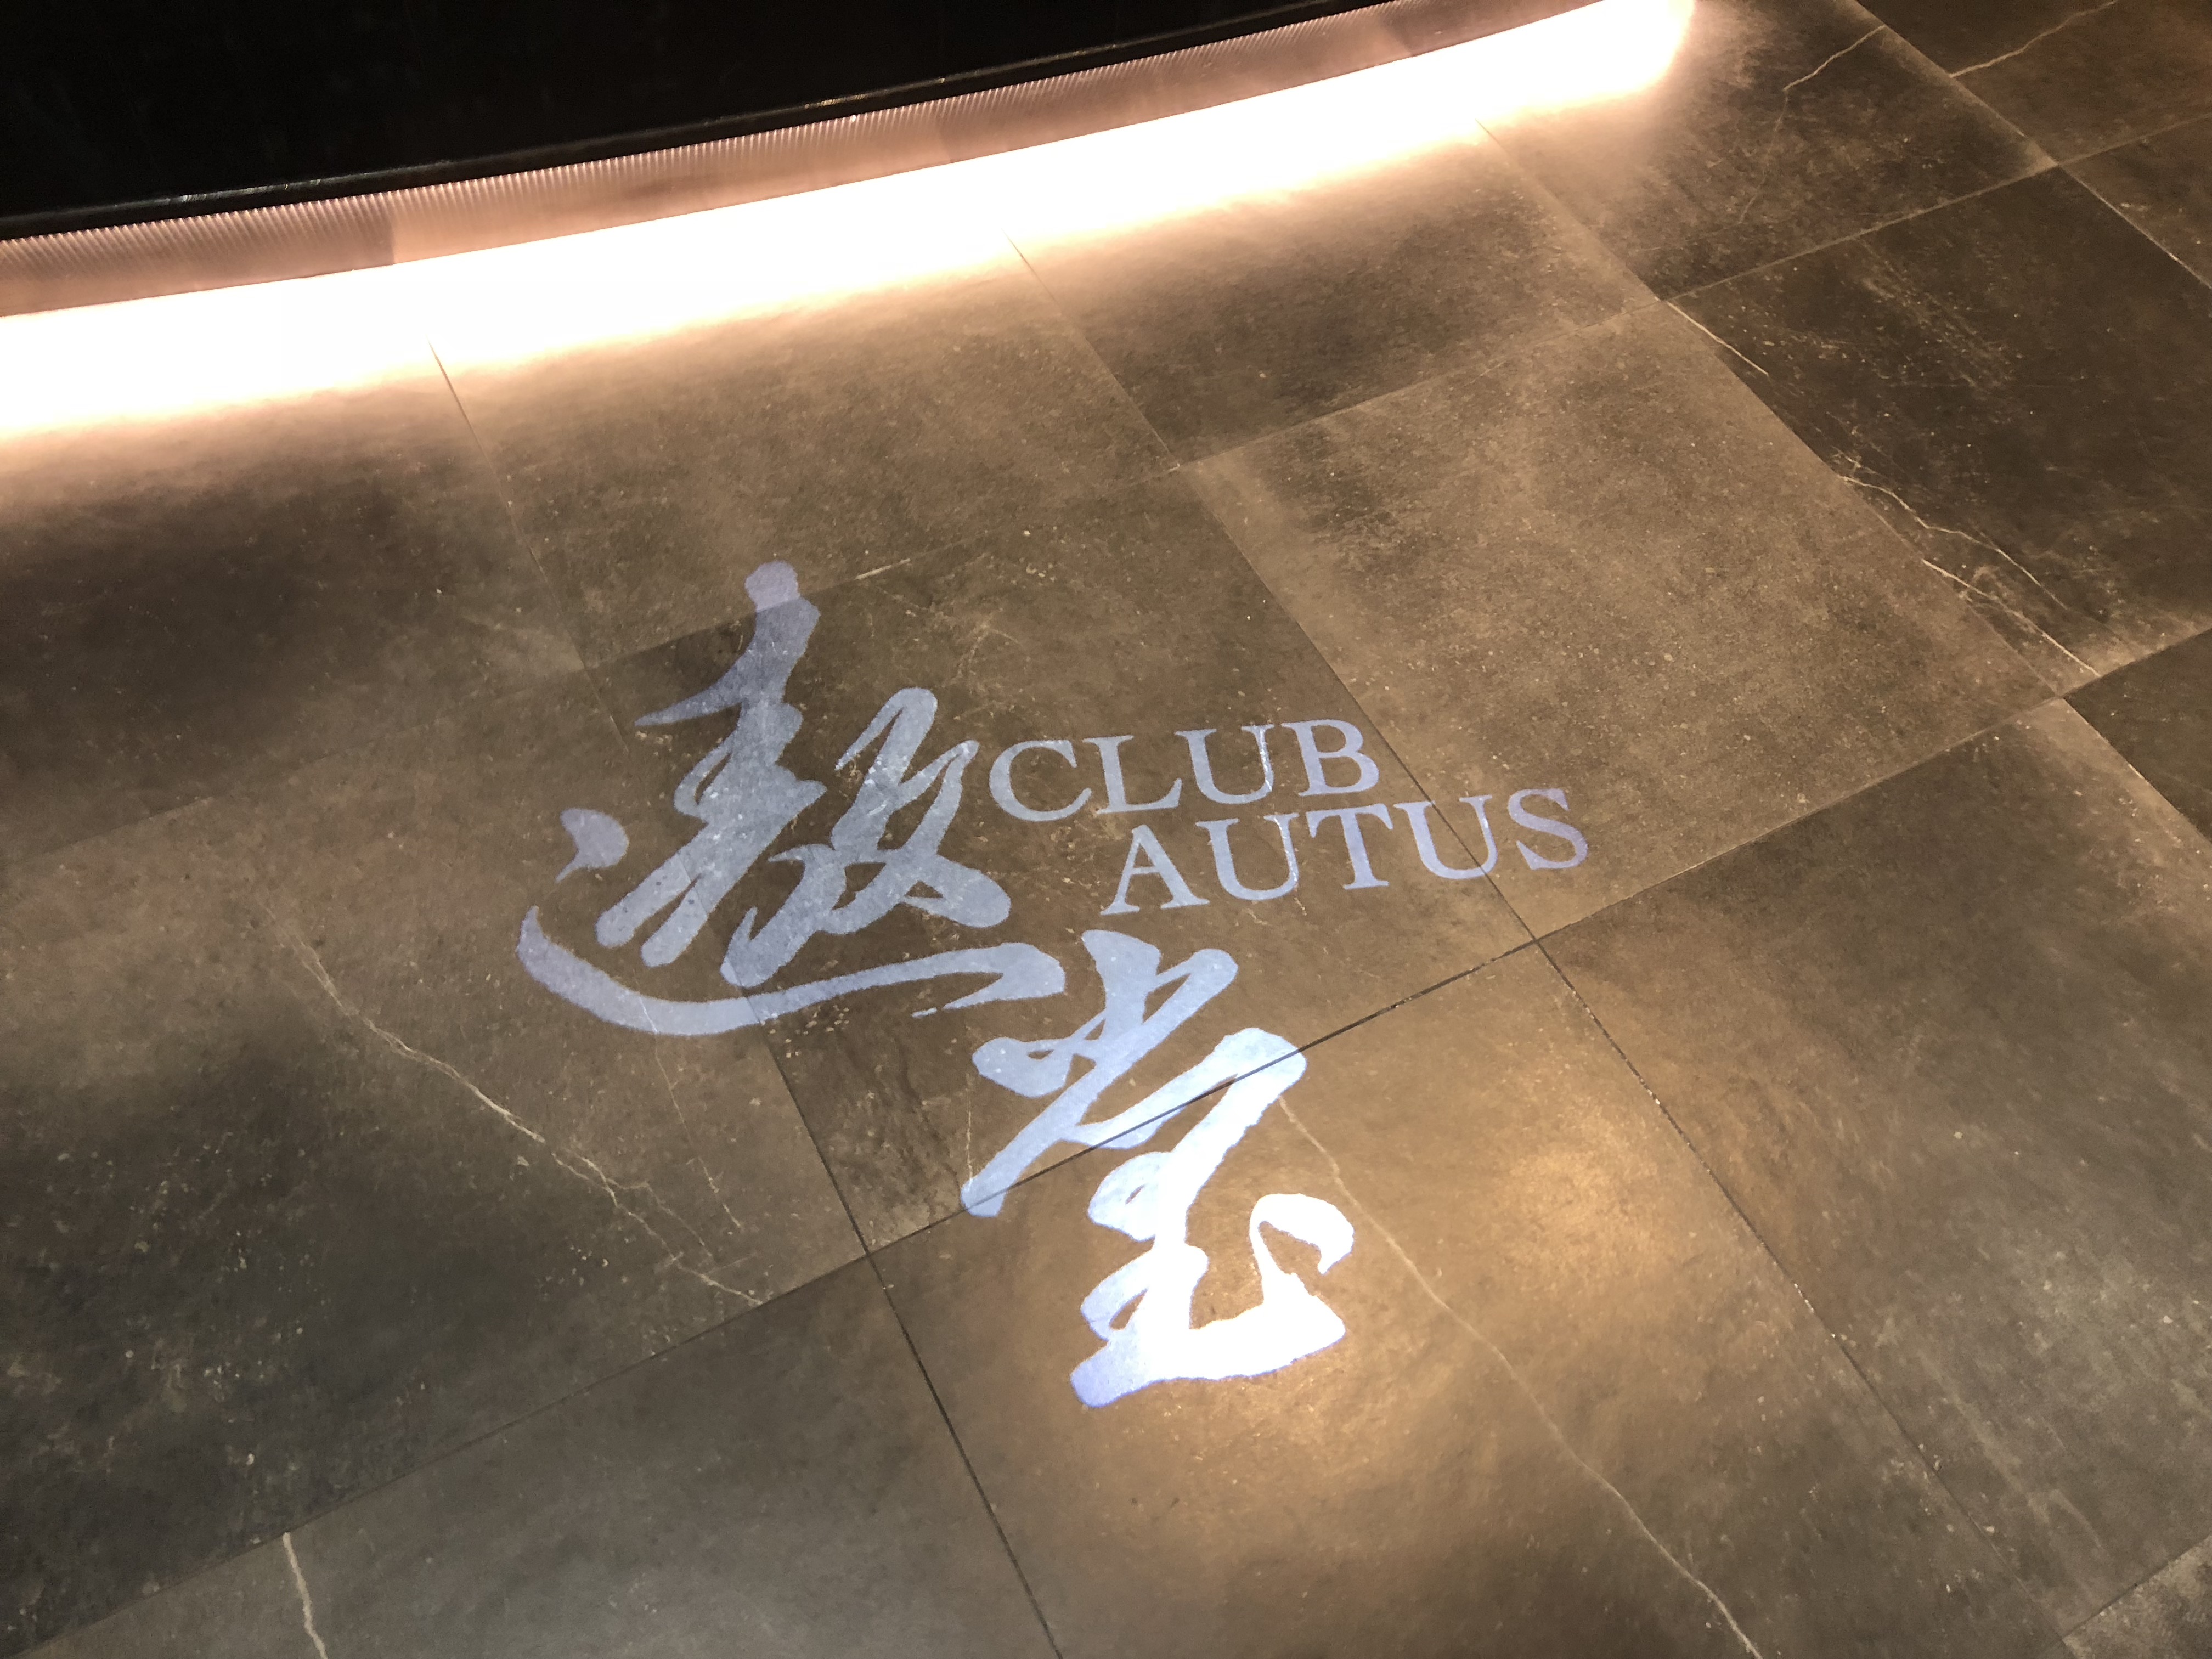 Hong Kong Airlines Business Class Lounge Hong Kong Club Autus